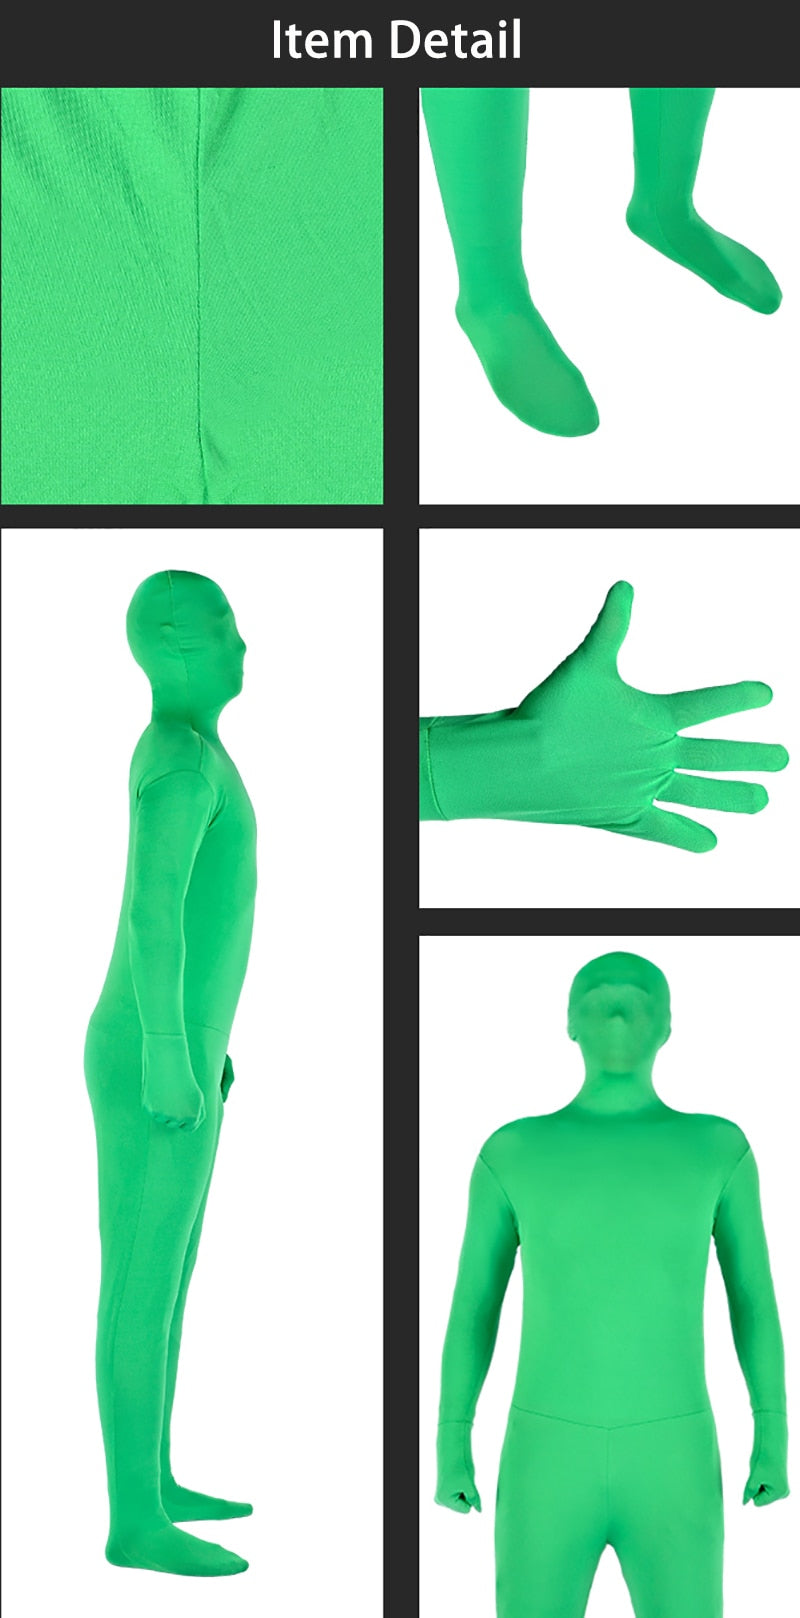 Green Screen Bodysuit